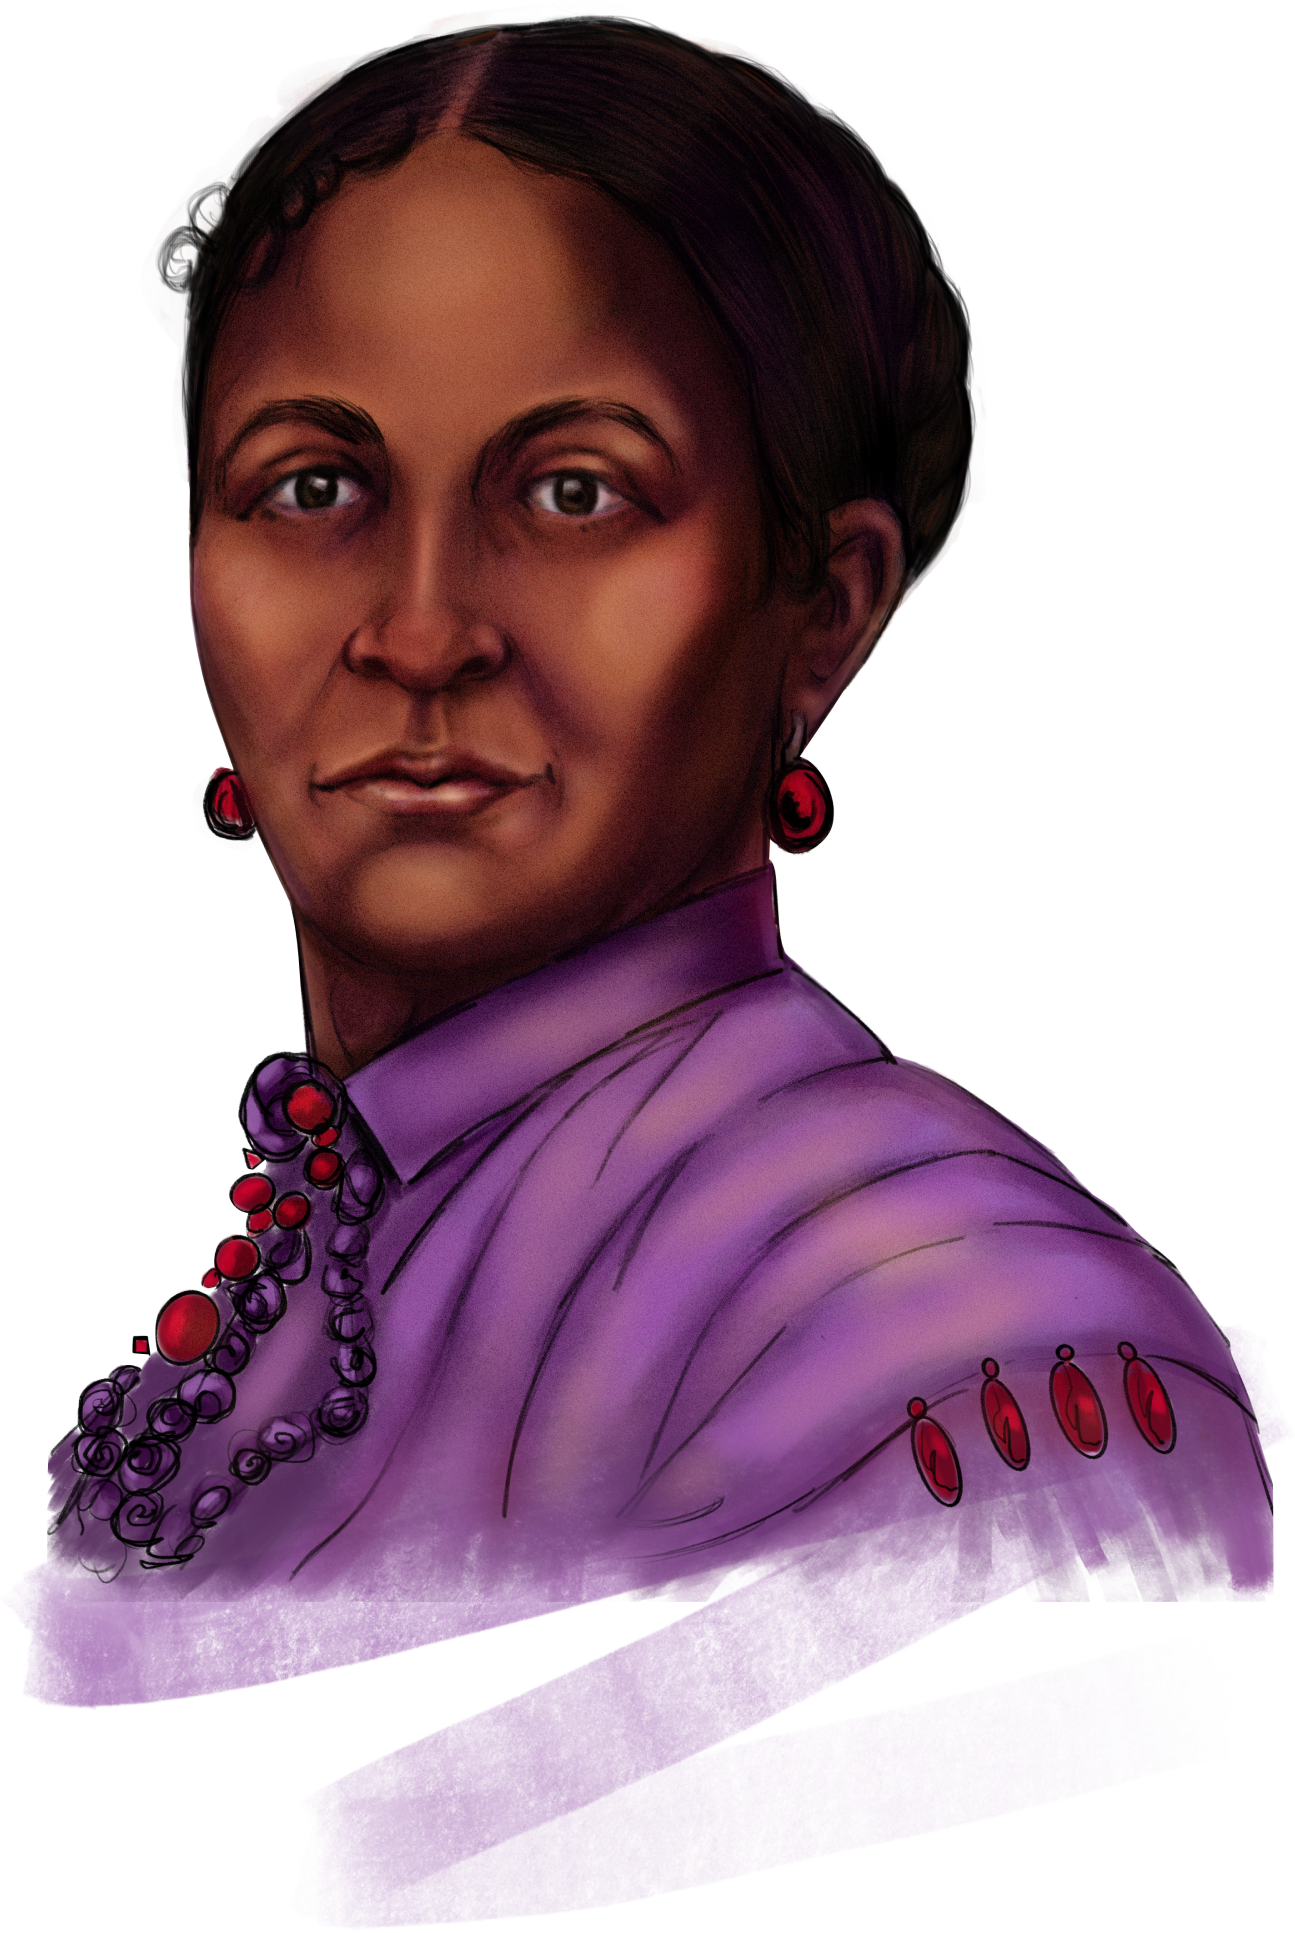 Color illustration of Elizabeth Keckley, a Black woman wearing a purple 1860's style dress.